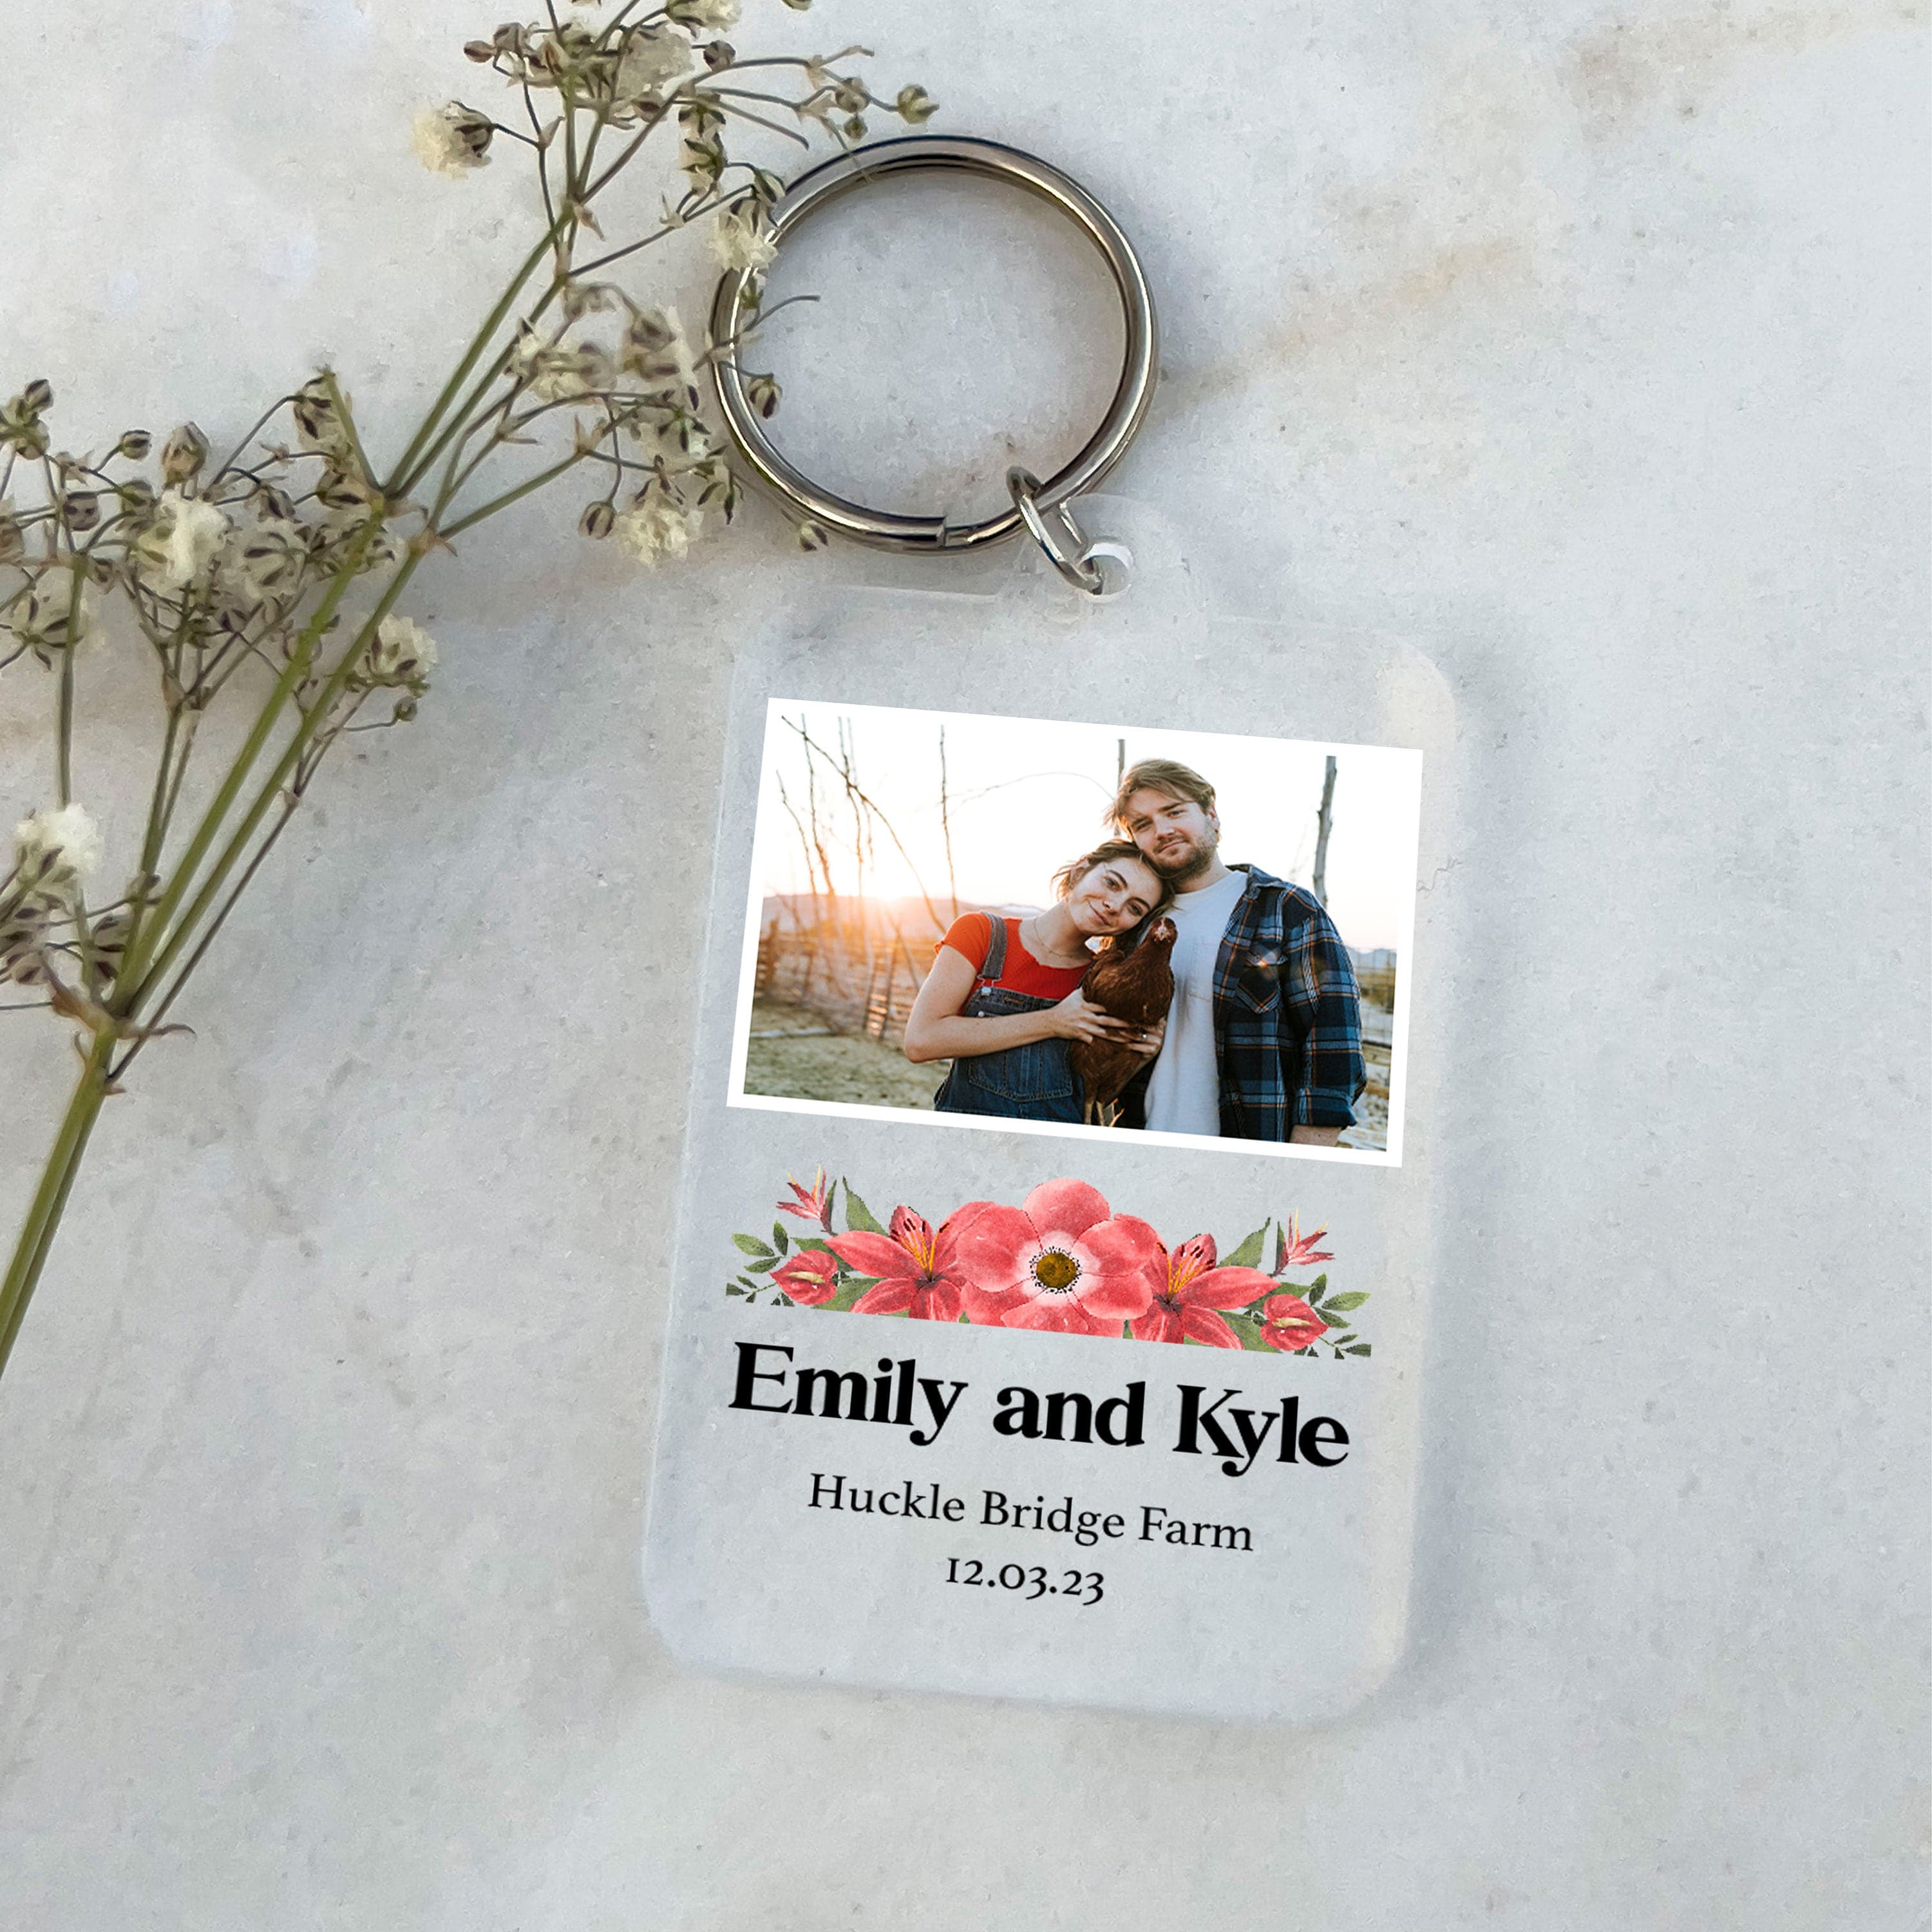 Personalised Photo Keyring, Keychain Gifts, Custom Text, Birthday, Wedding, Bridesmaids, Anniversary, Engagement, Christmas Gift